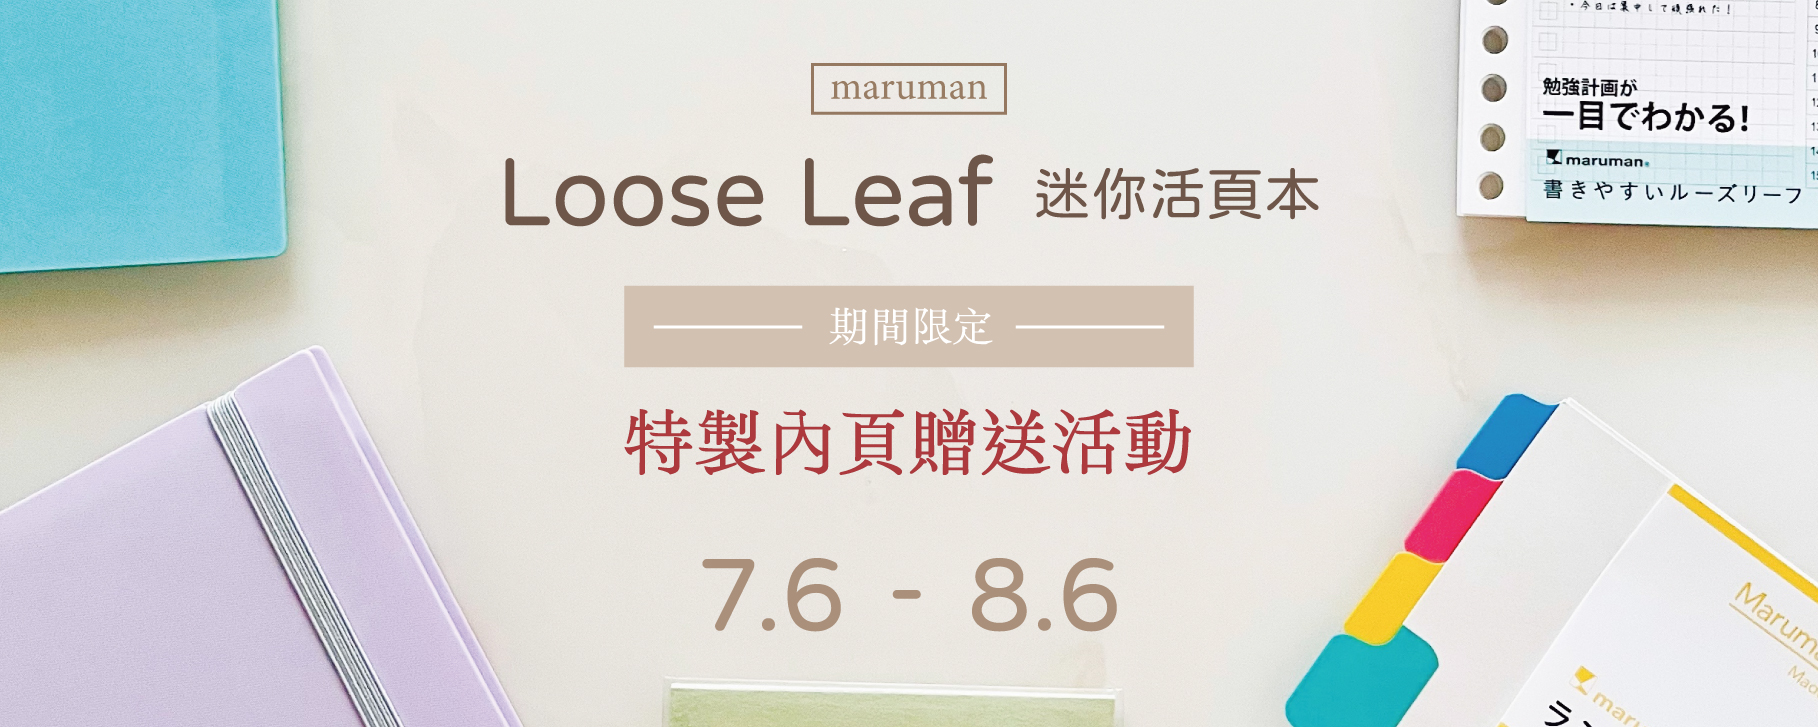 Loose Leaf 迷你活頁本〔贈品活動〕